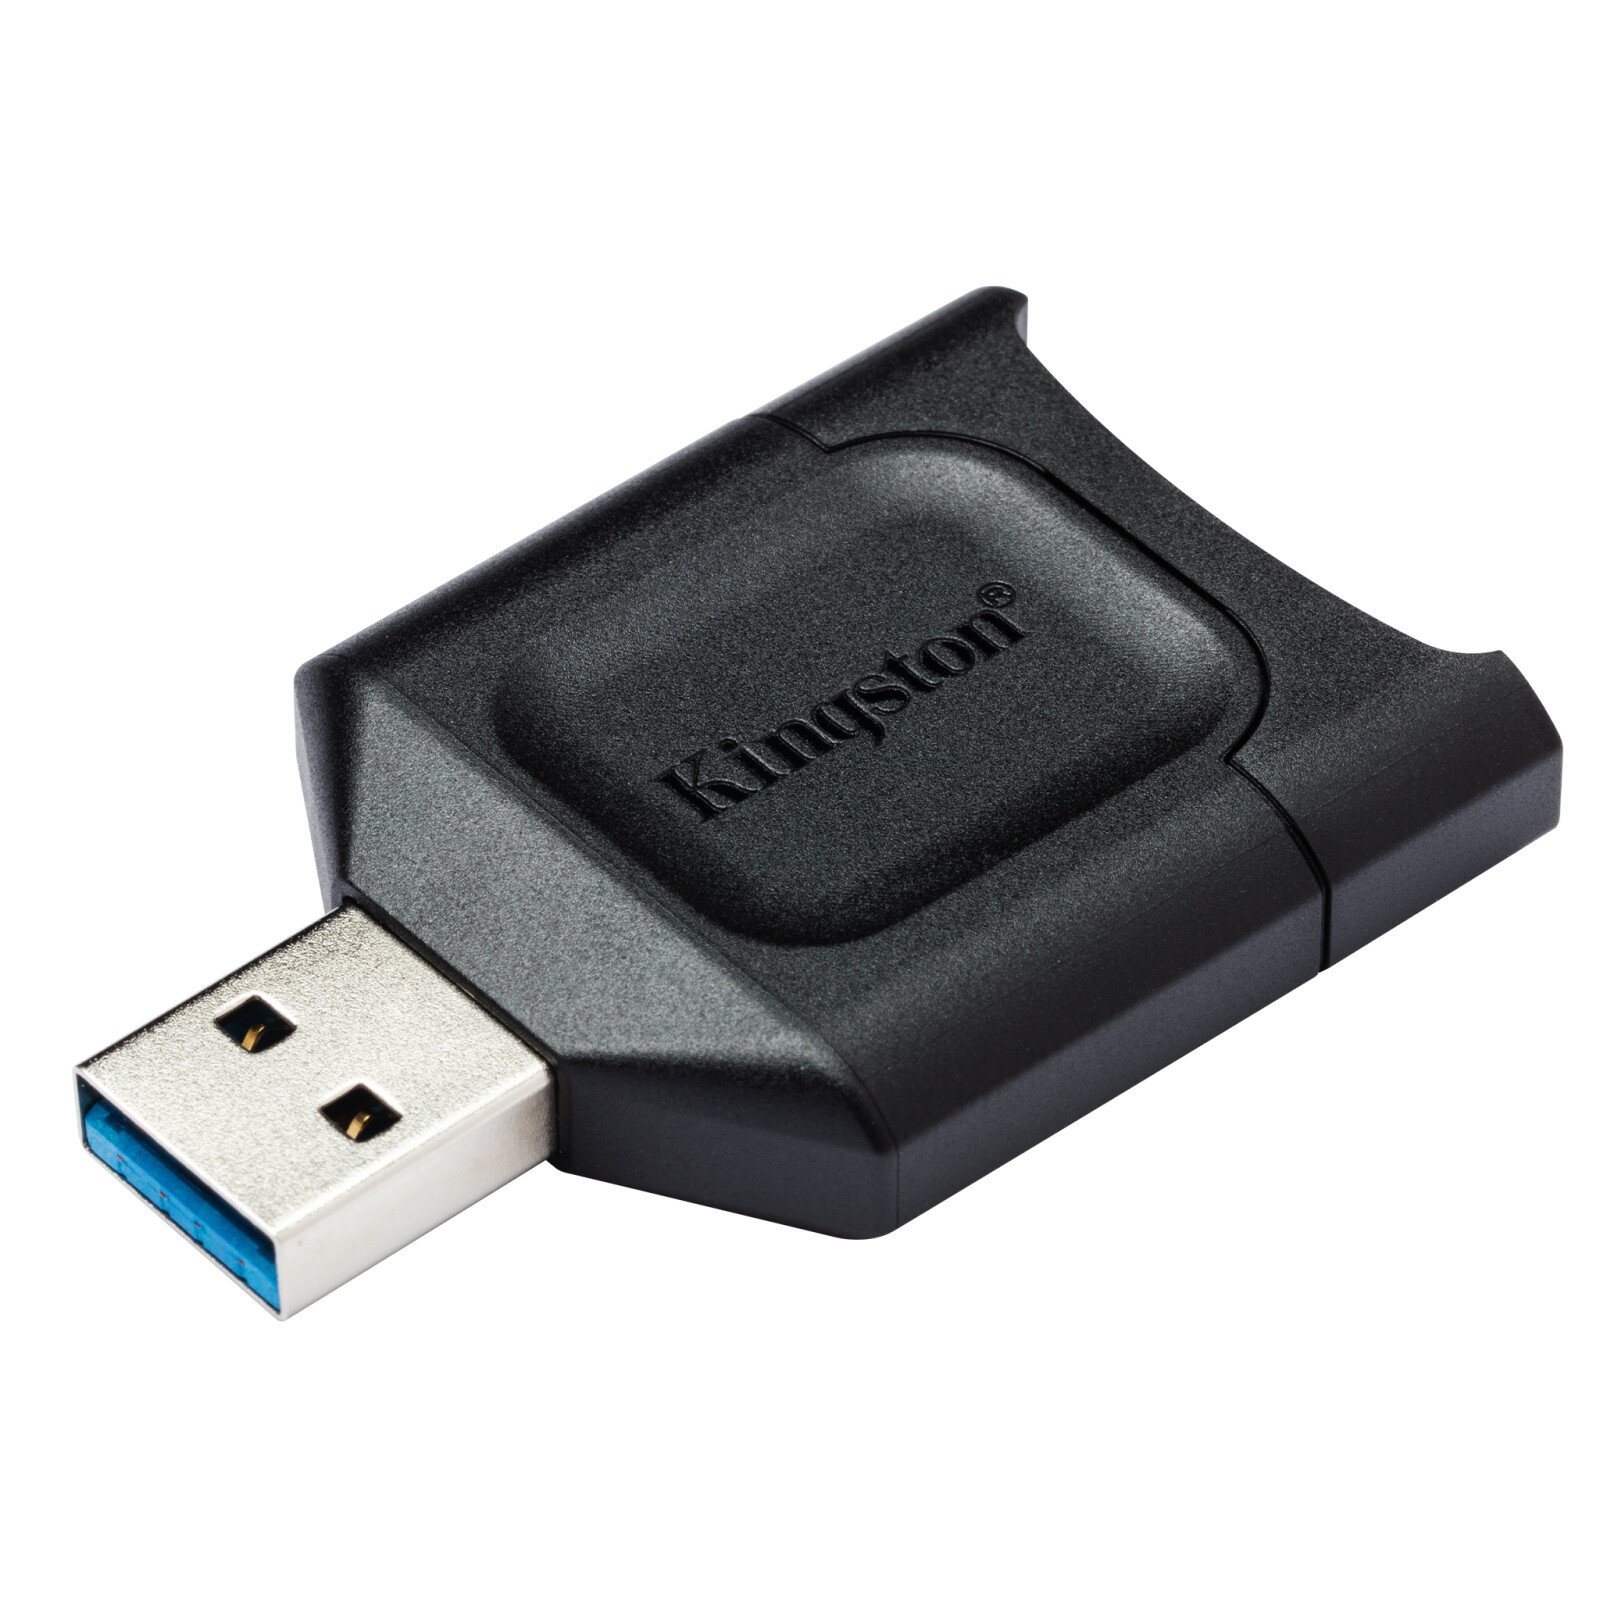 CARD READER extern KINGSTON, interfata USB 3.0, citeste/scrie: SD, micro SD, plastic, negru, "MLP" (timbru verde 0.03 lei) thumb